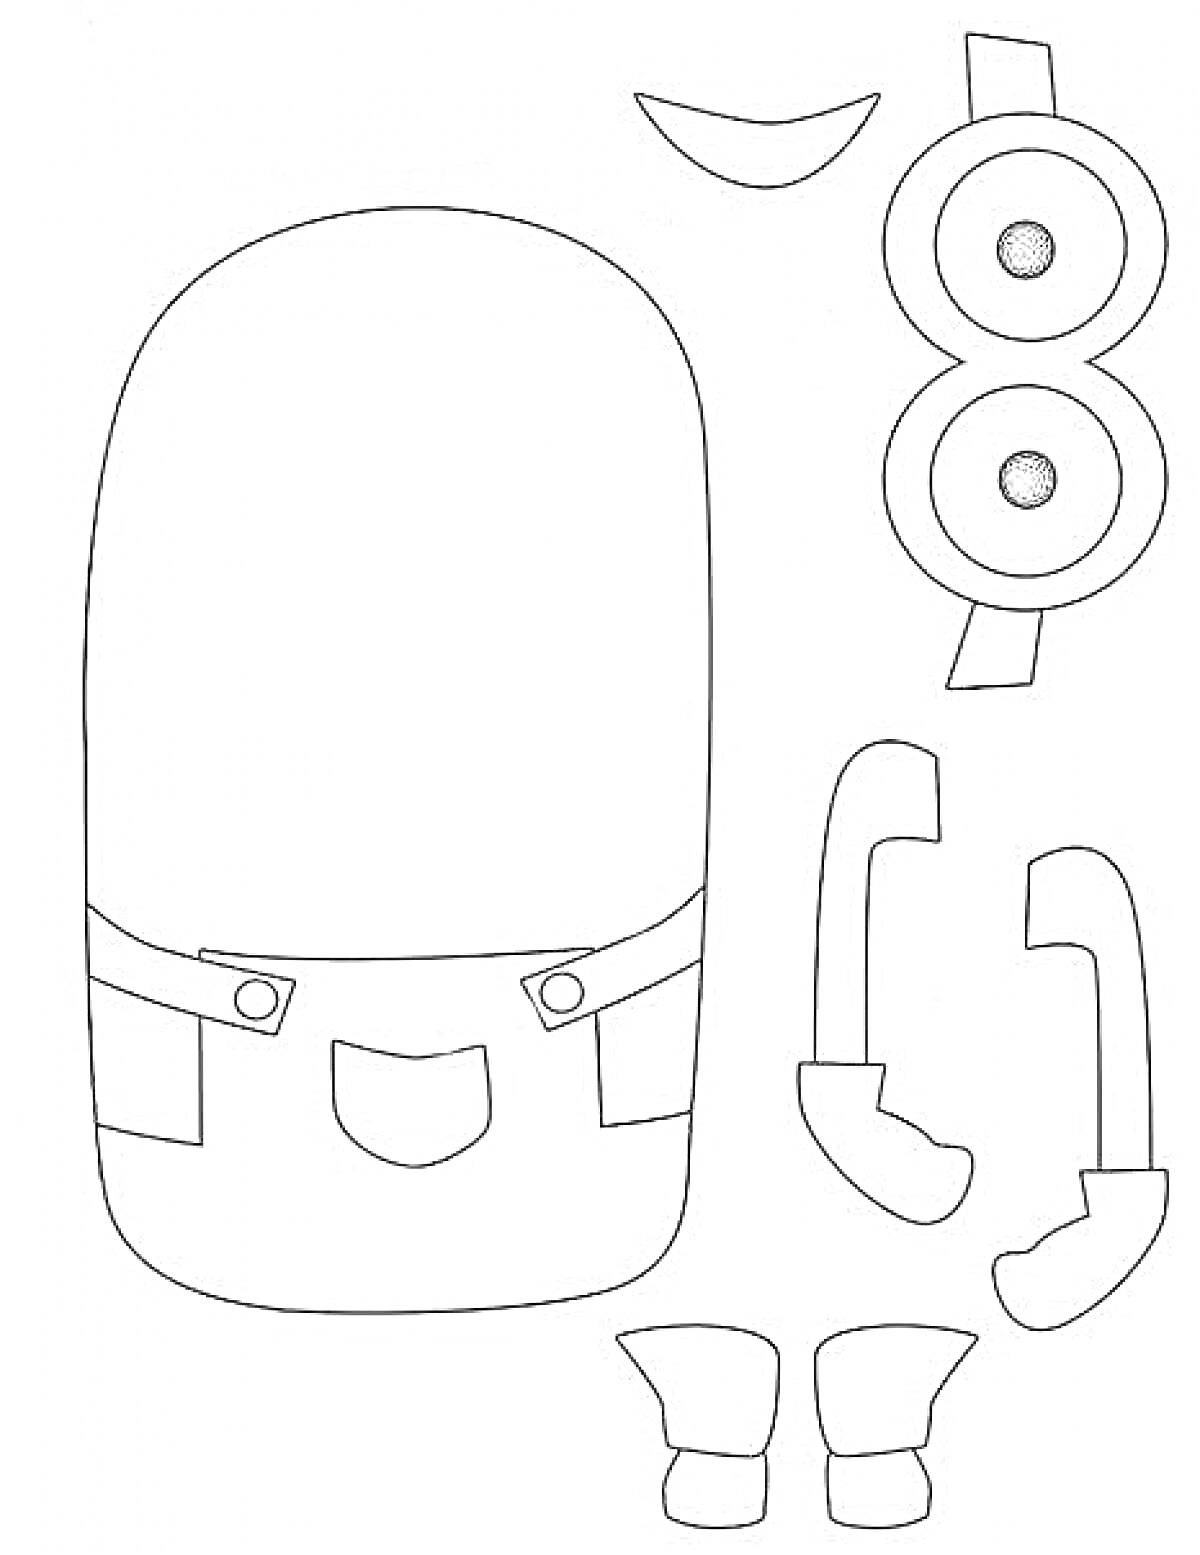 Фигурки для аппликации миньона (тело, глаза, очки, руки, перчатки, ноги, рот)